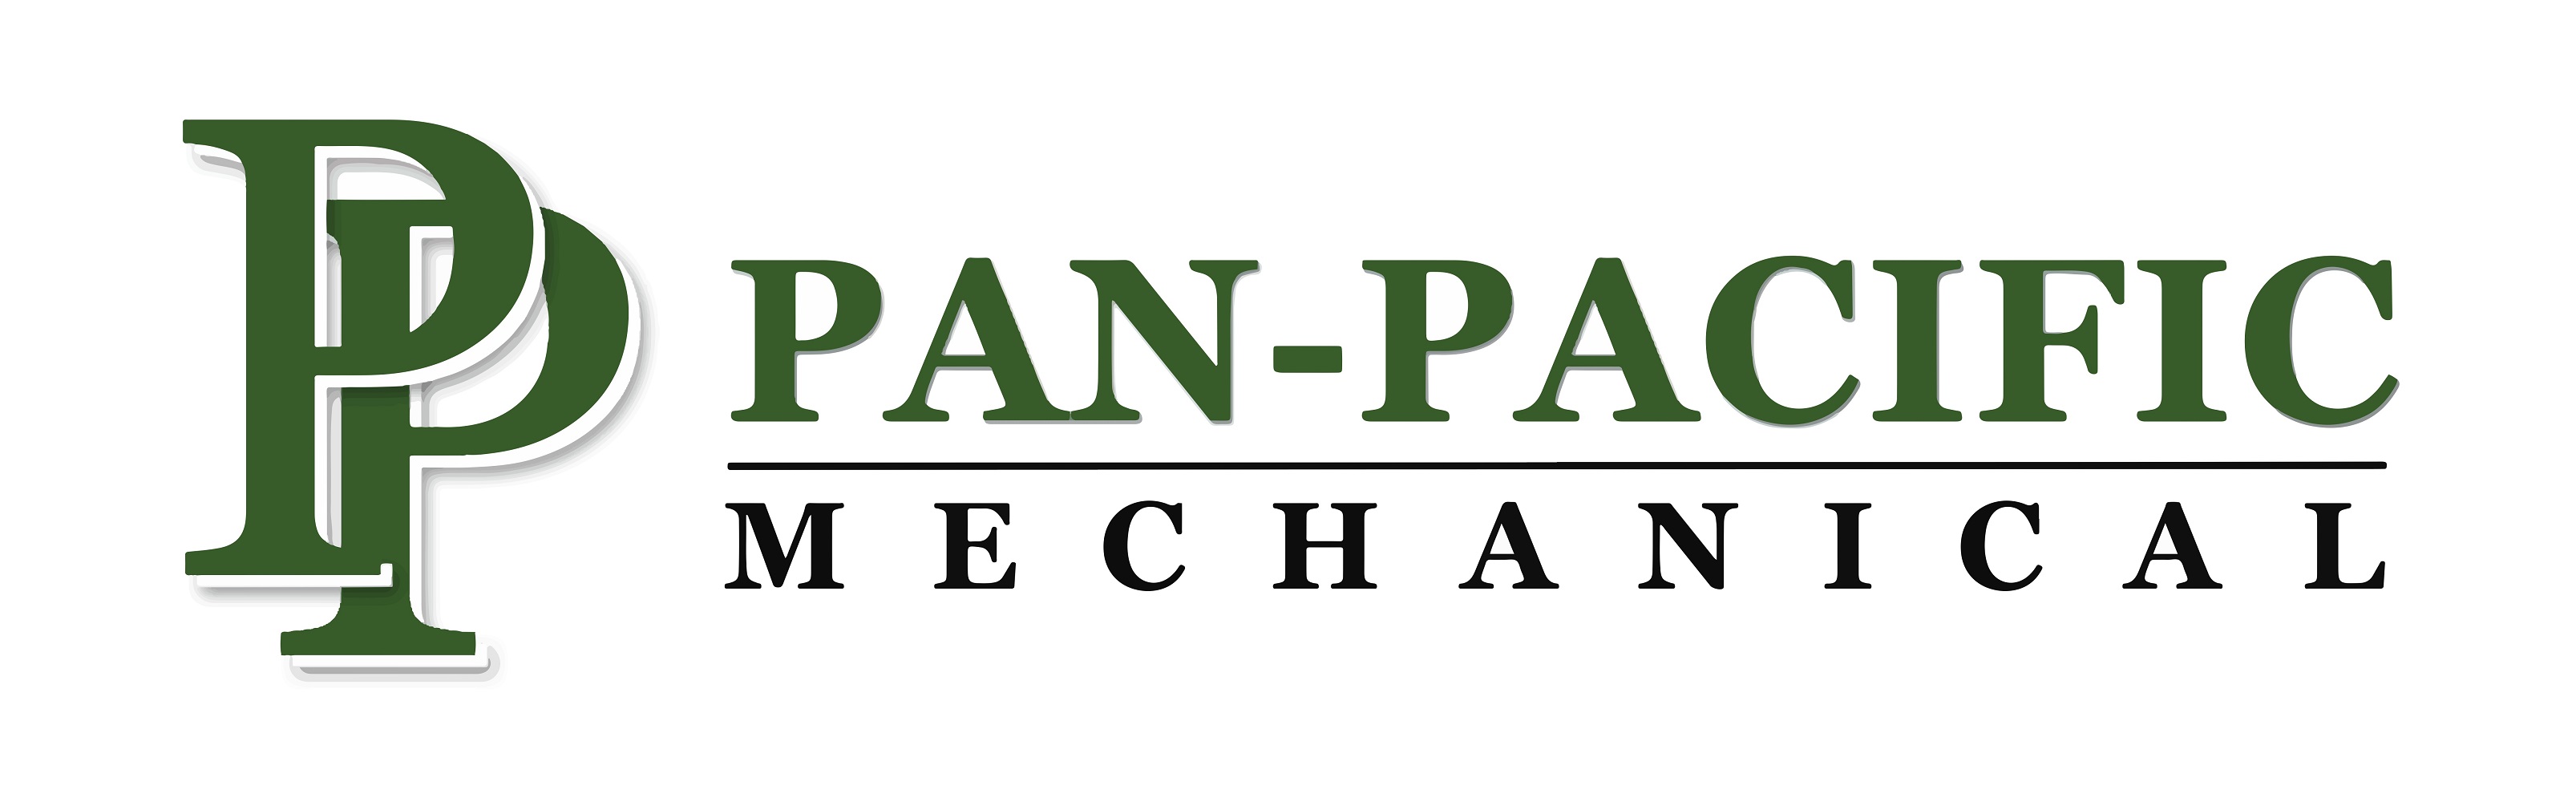 Pan Pacific Mechanical